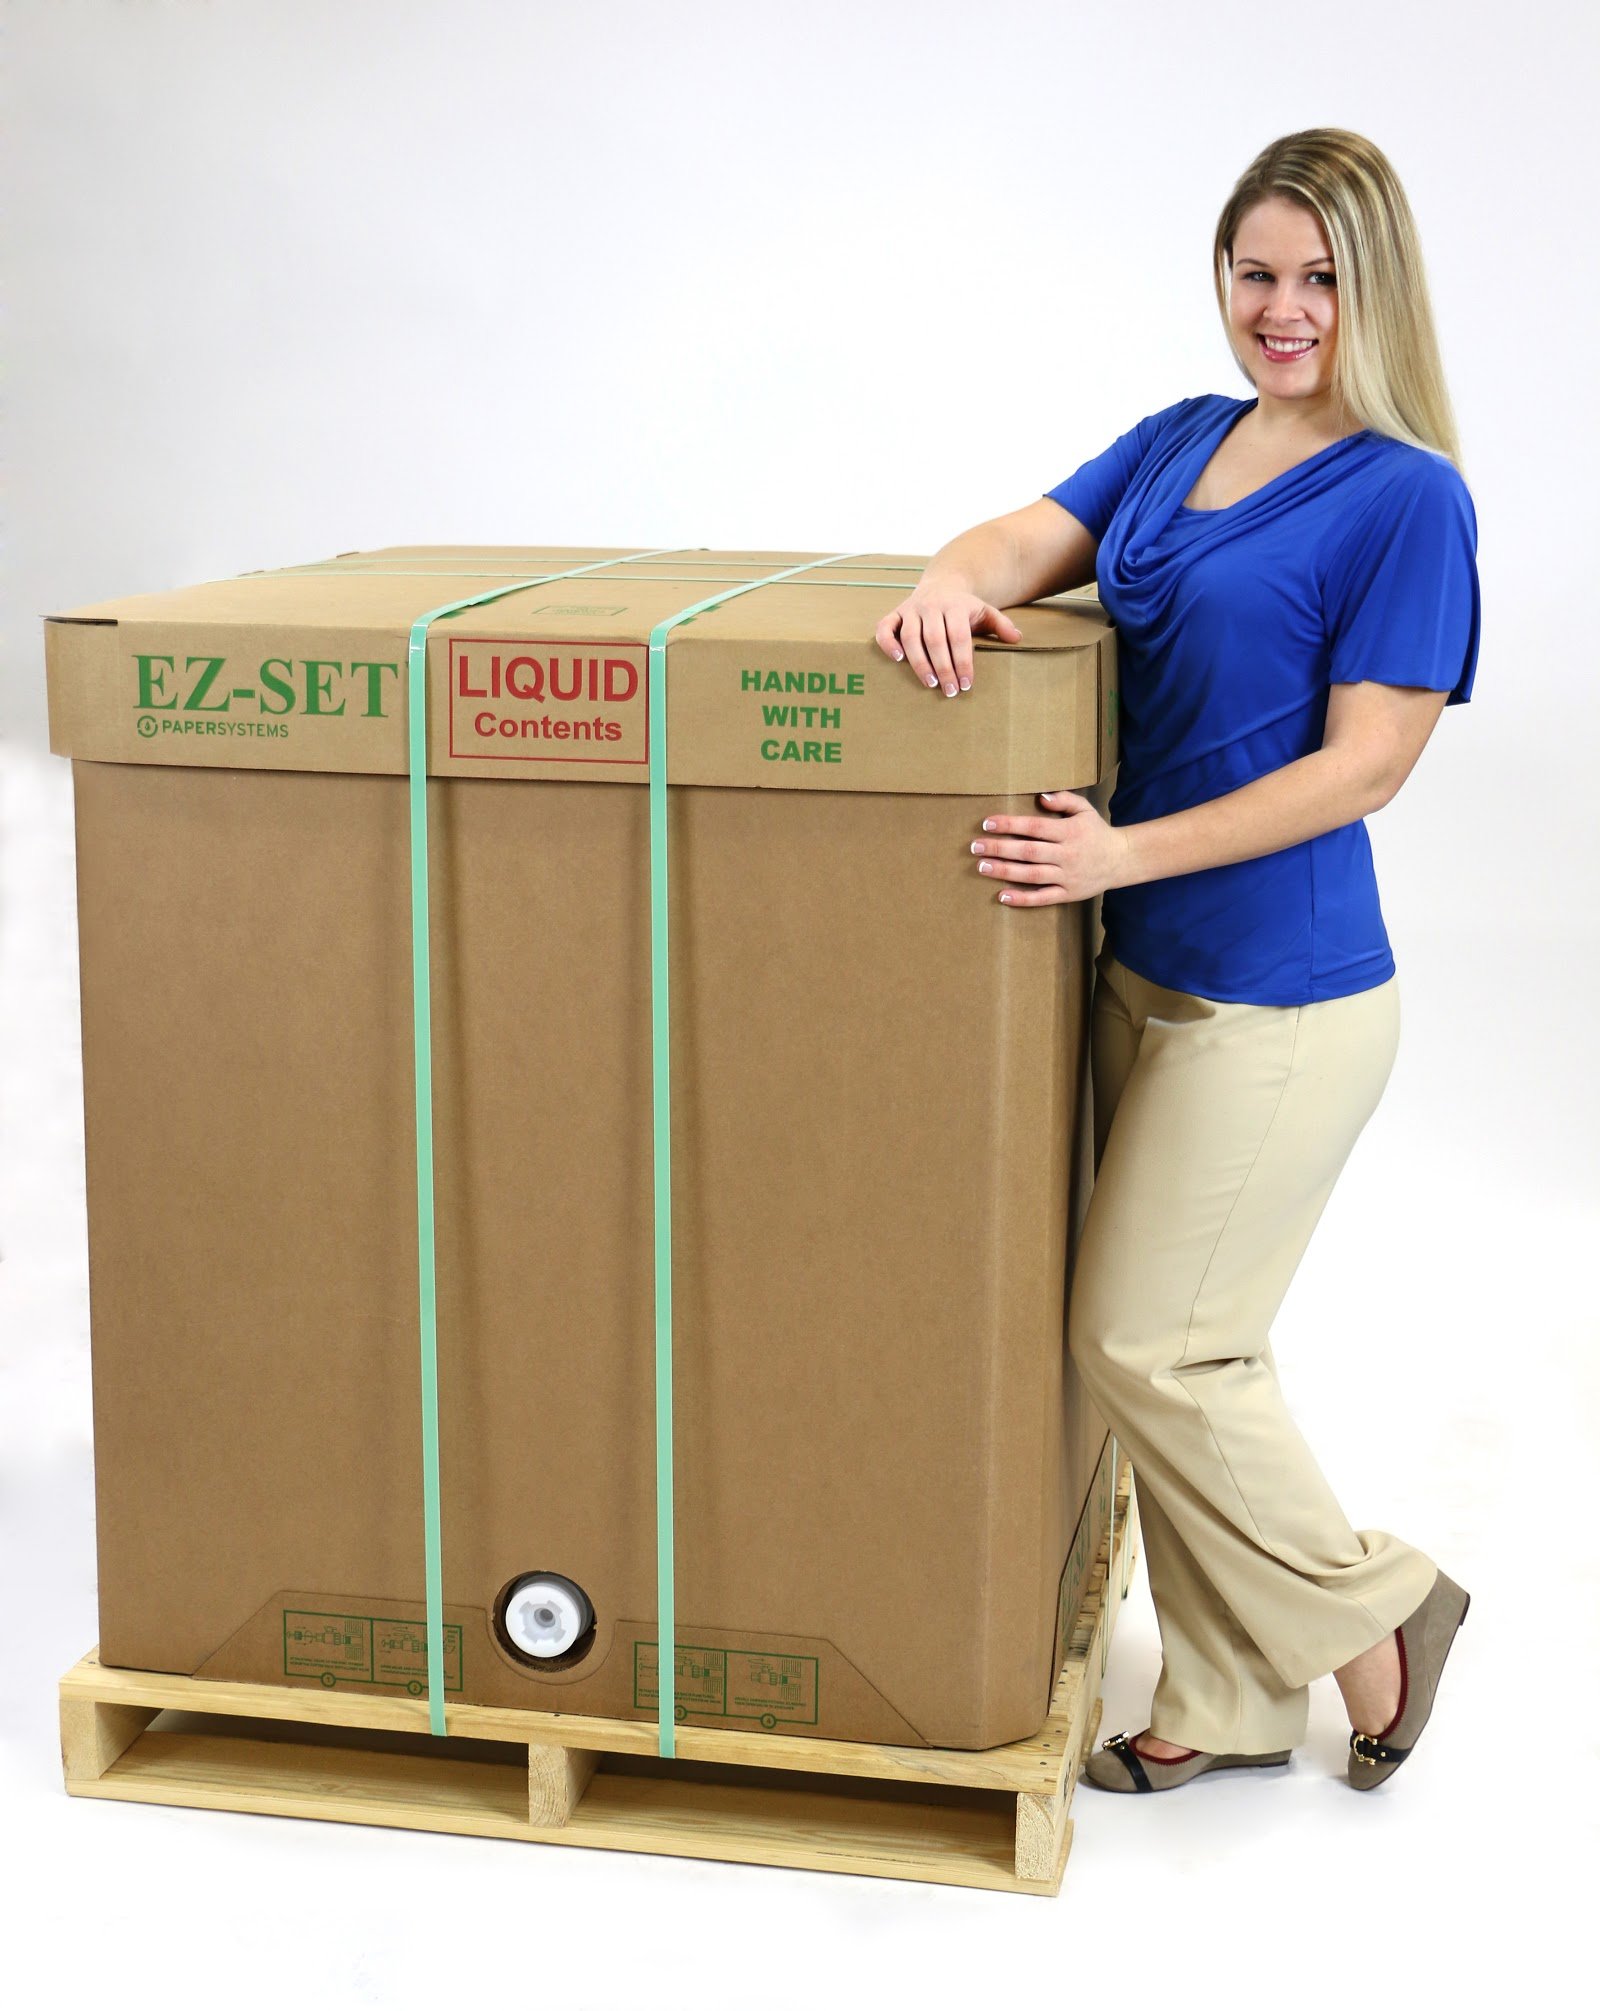 EZ-SET liquid bulk container ready to ship